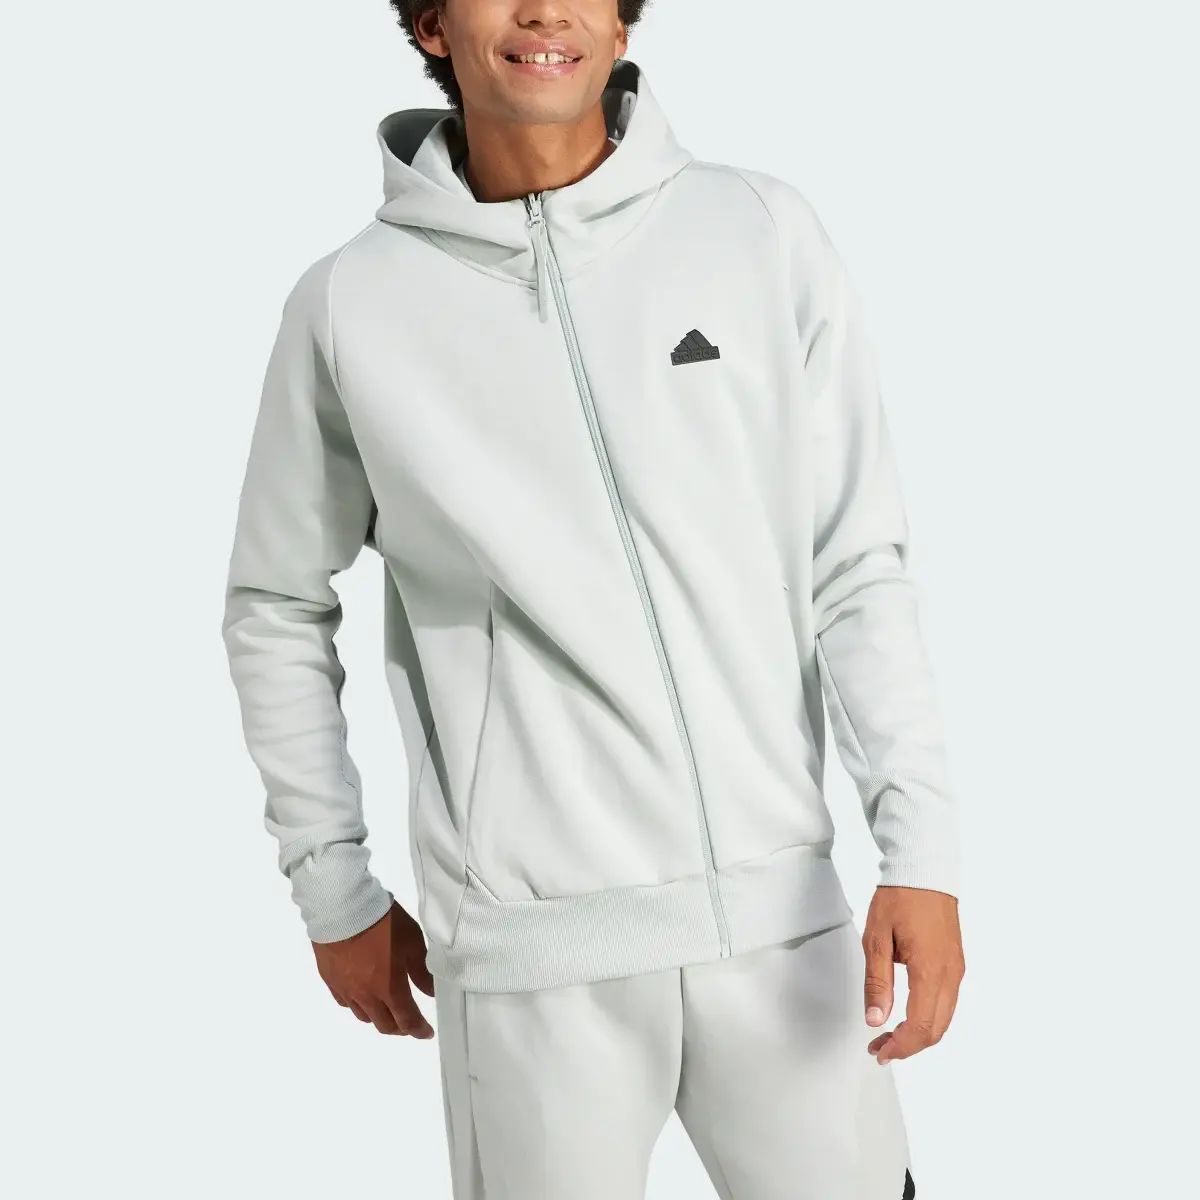 Adidas Bluza dresowa Z.N.E. Premium Full-Zip Hooded. 1